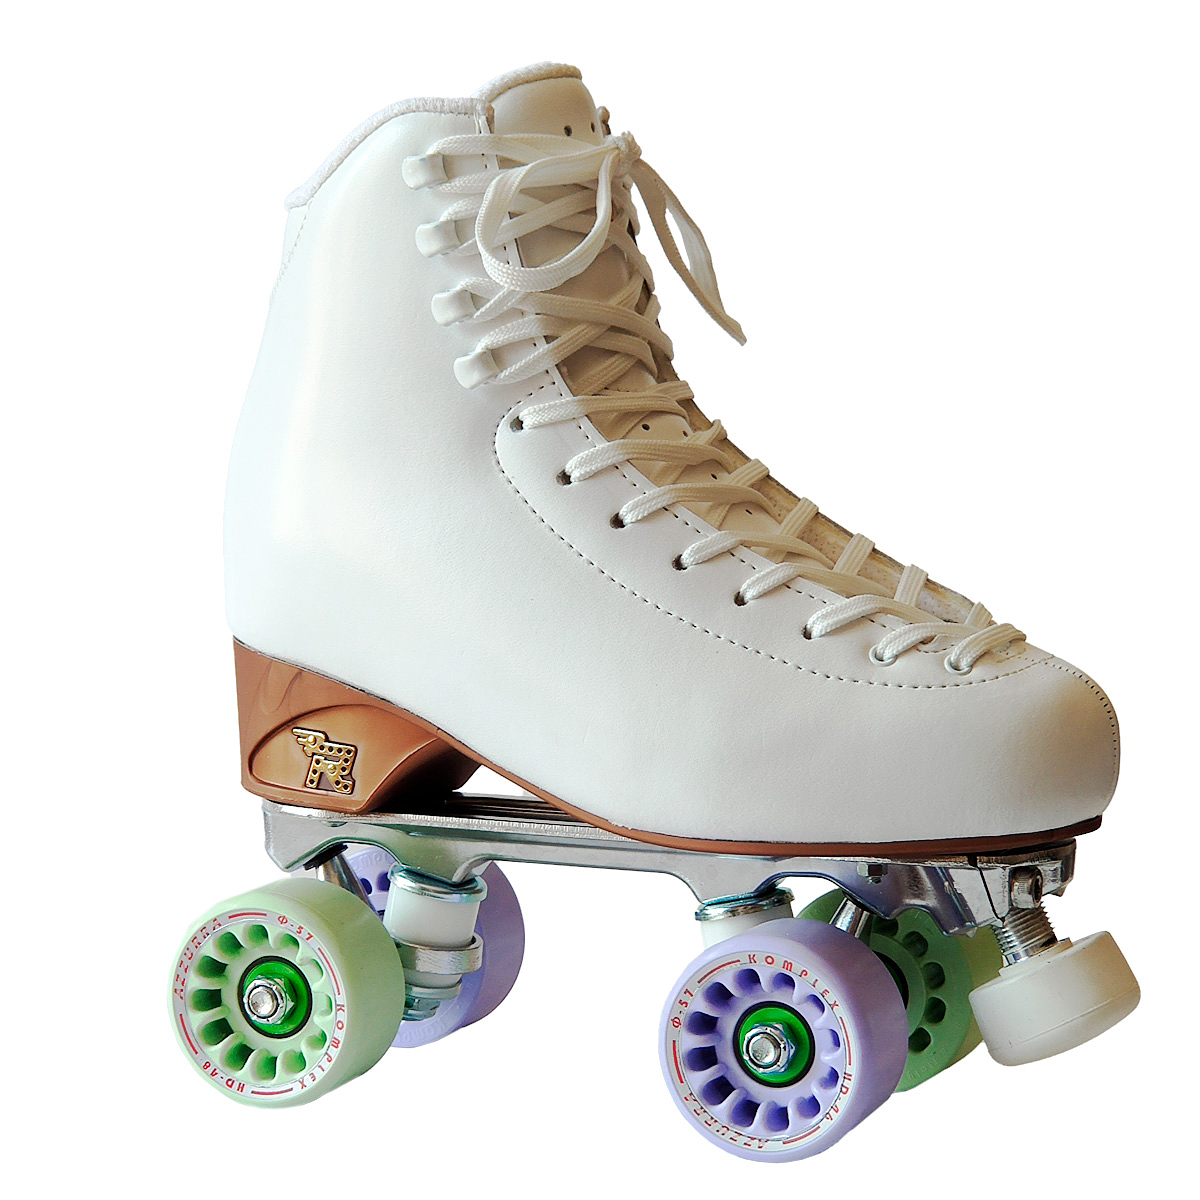 Spinner Risport para patinaje artístico  Patinaje artístico, Patinaje, Patinaje  artístico sobre hielo